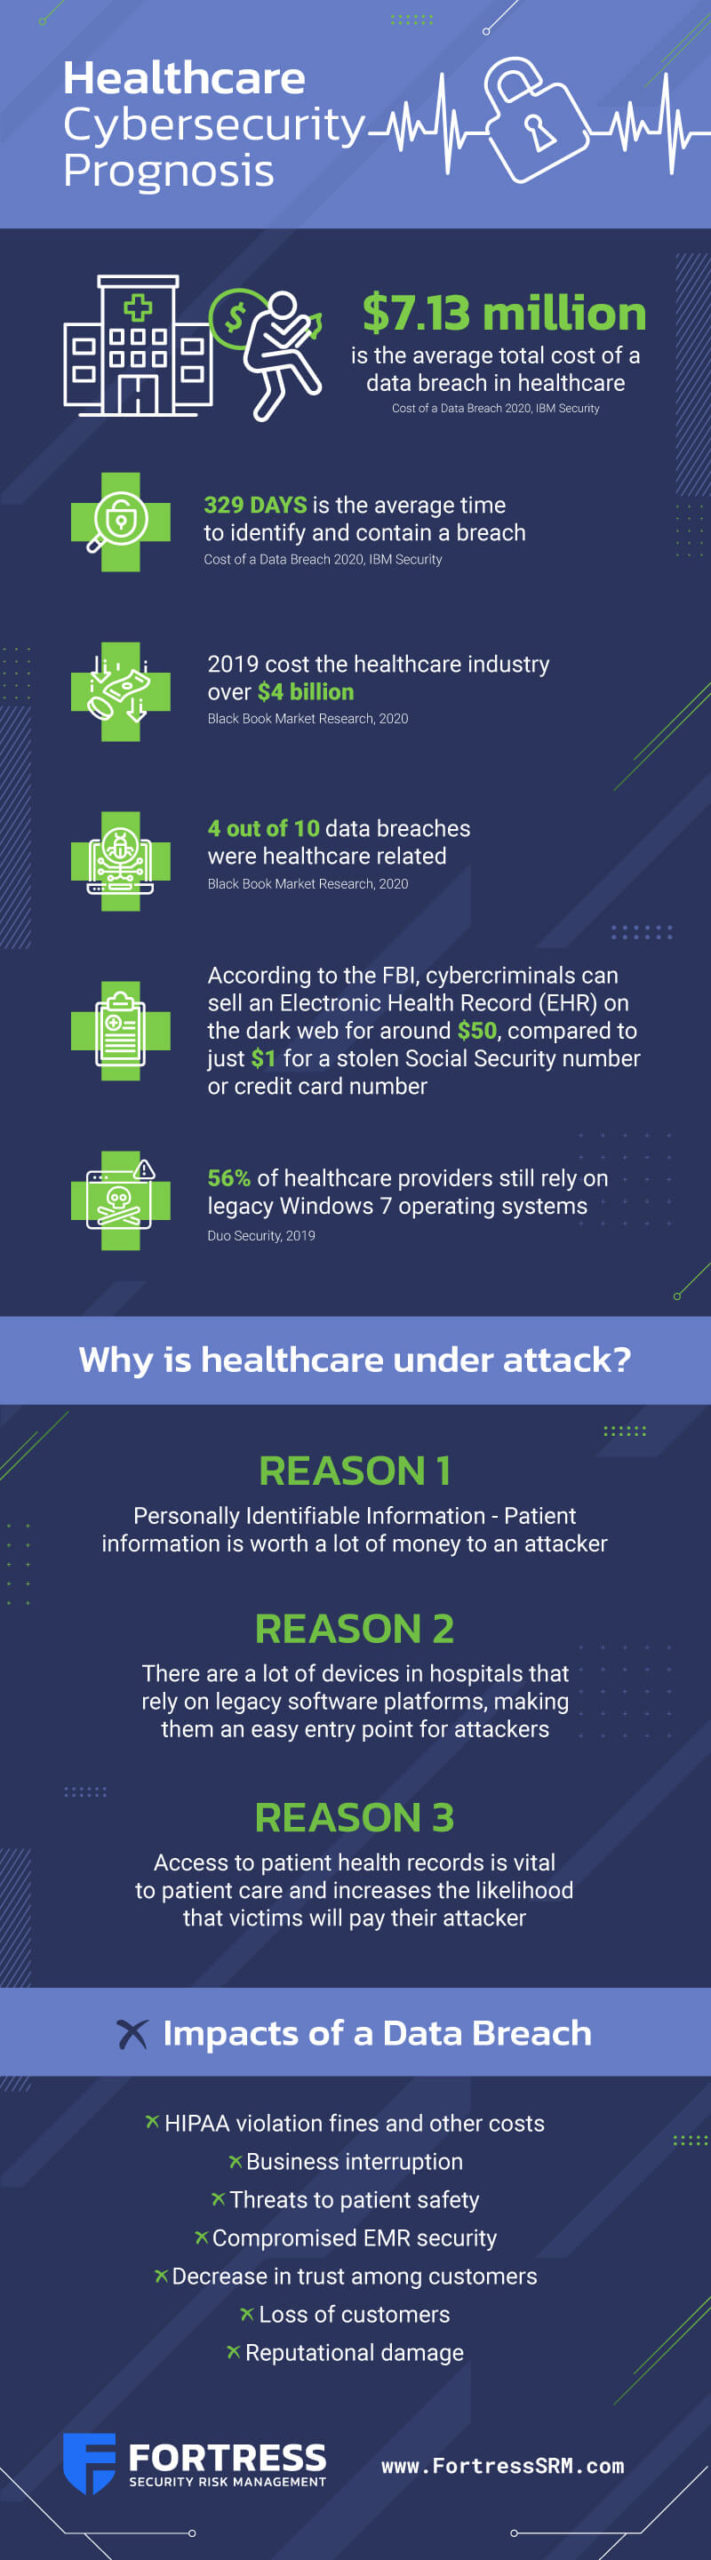 Healthcare Cybersecurity Prognosis Infographic